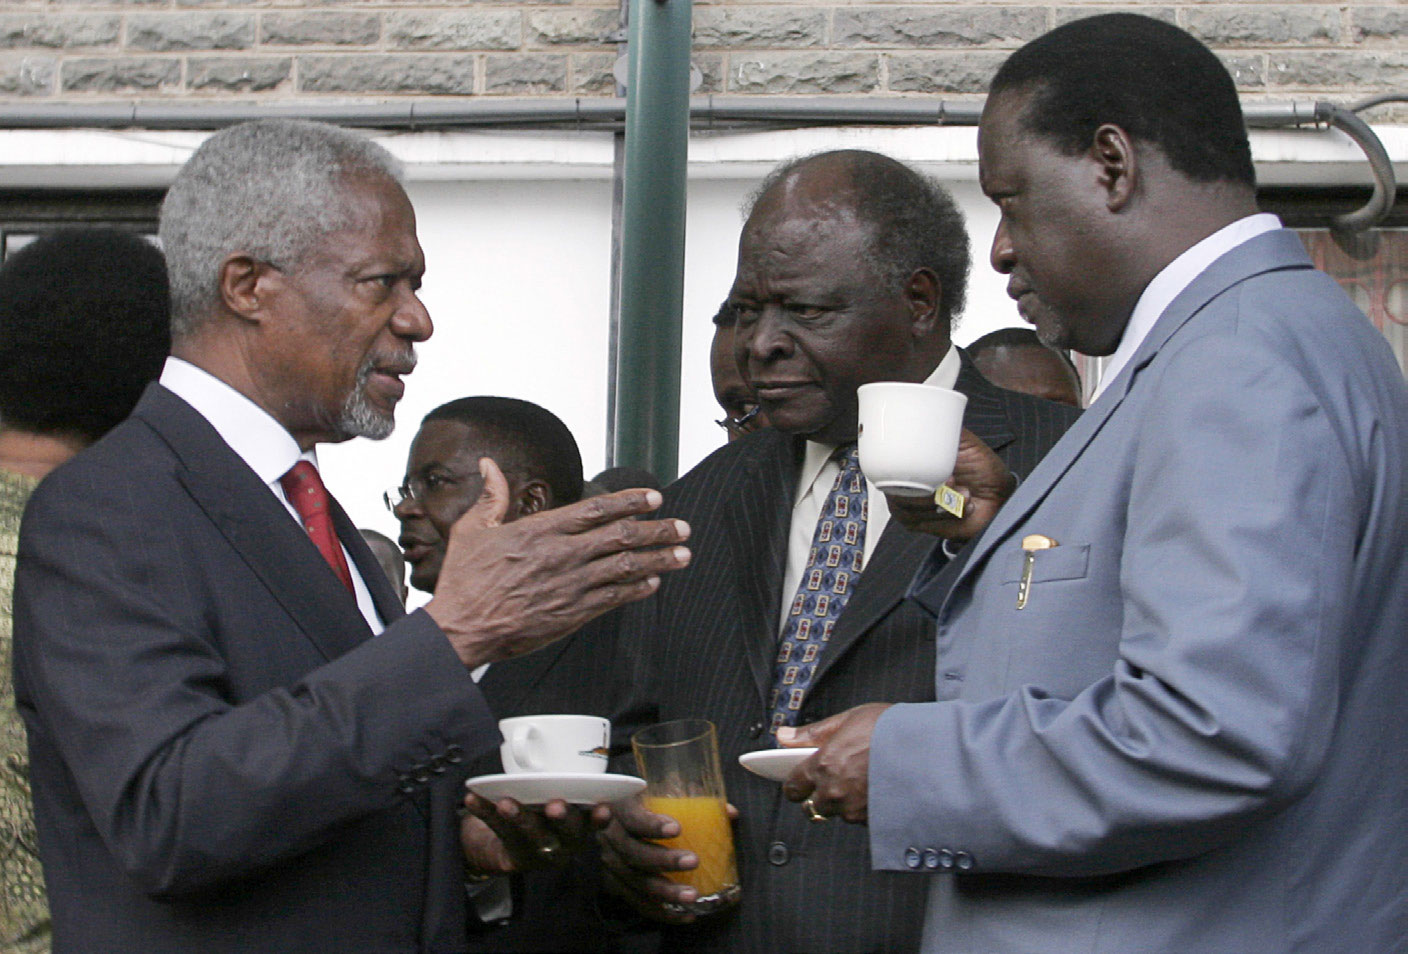 Former UN Secretary-General Kofi Annan (L) talks with Kenya’s President Mwai Kibaki (C) and opposition leader Raila Odinga